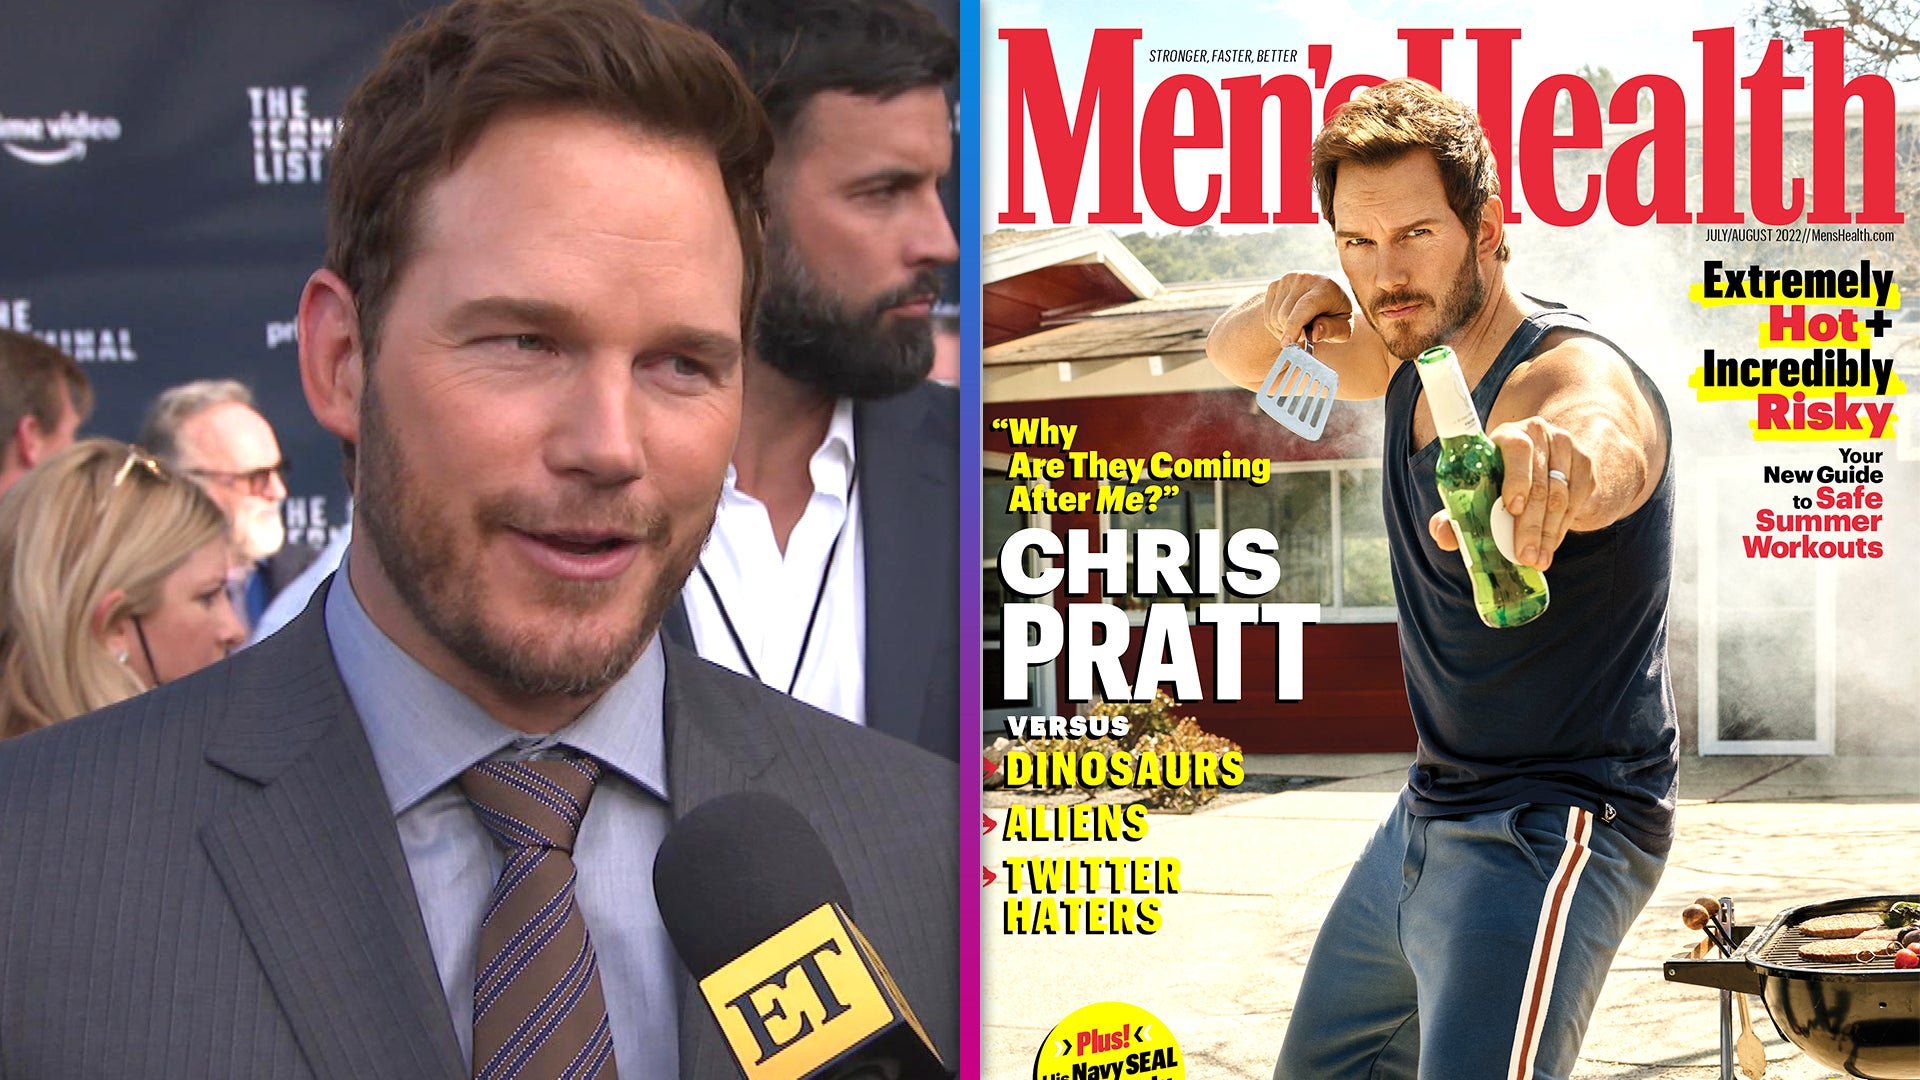 Chris Pratt defends his faith - Deseret News